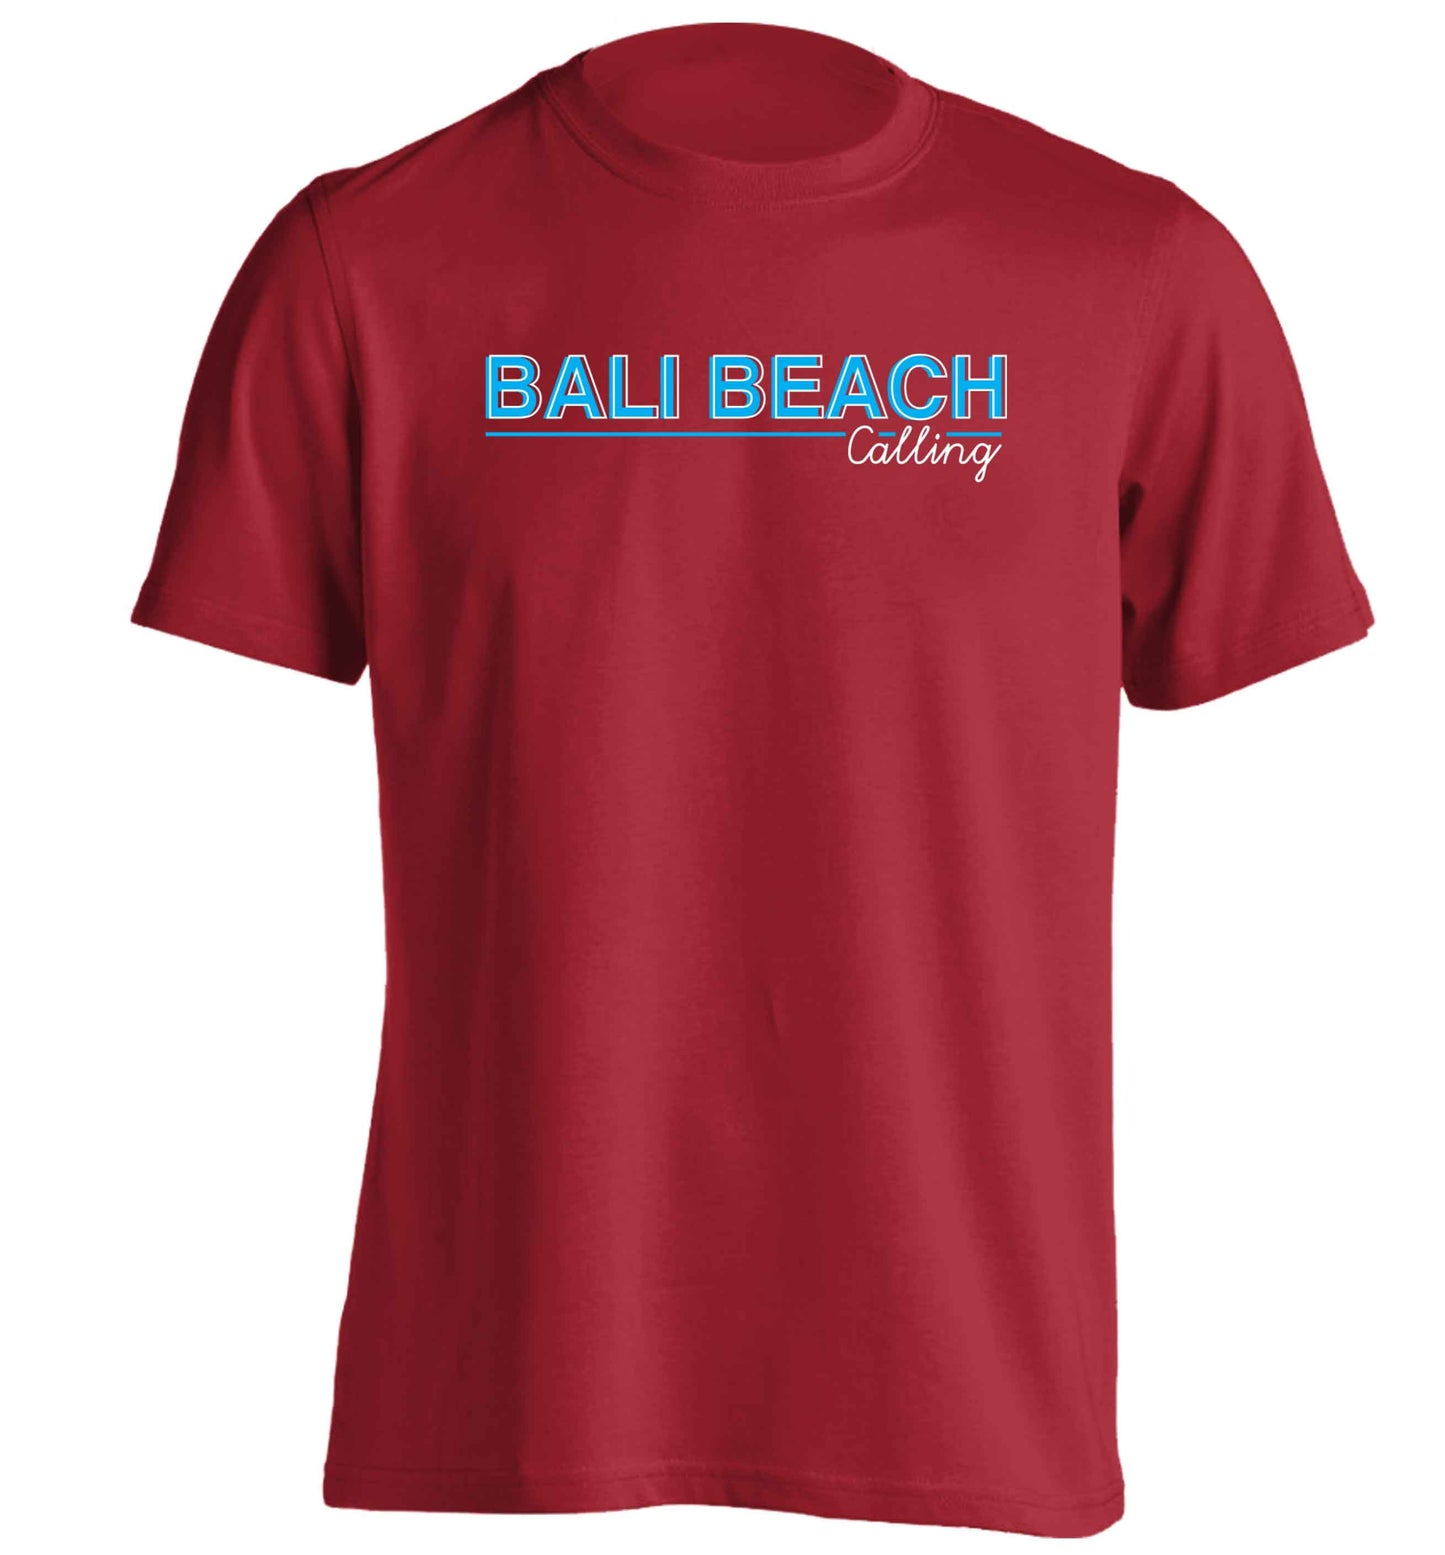 Bali beach calling adults unisex red Tshirt 2XL